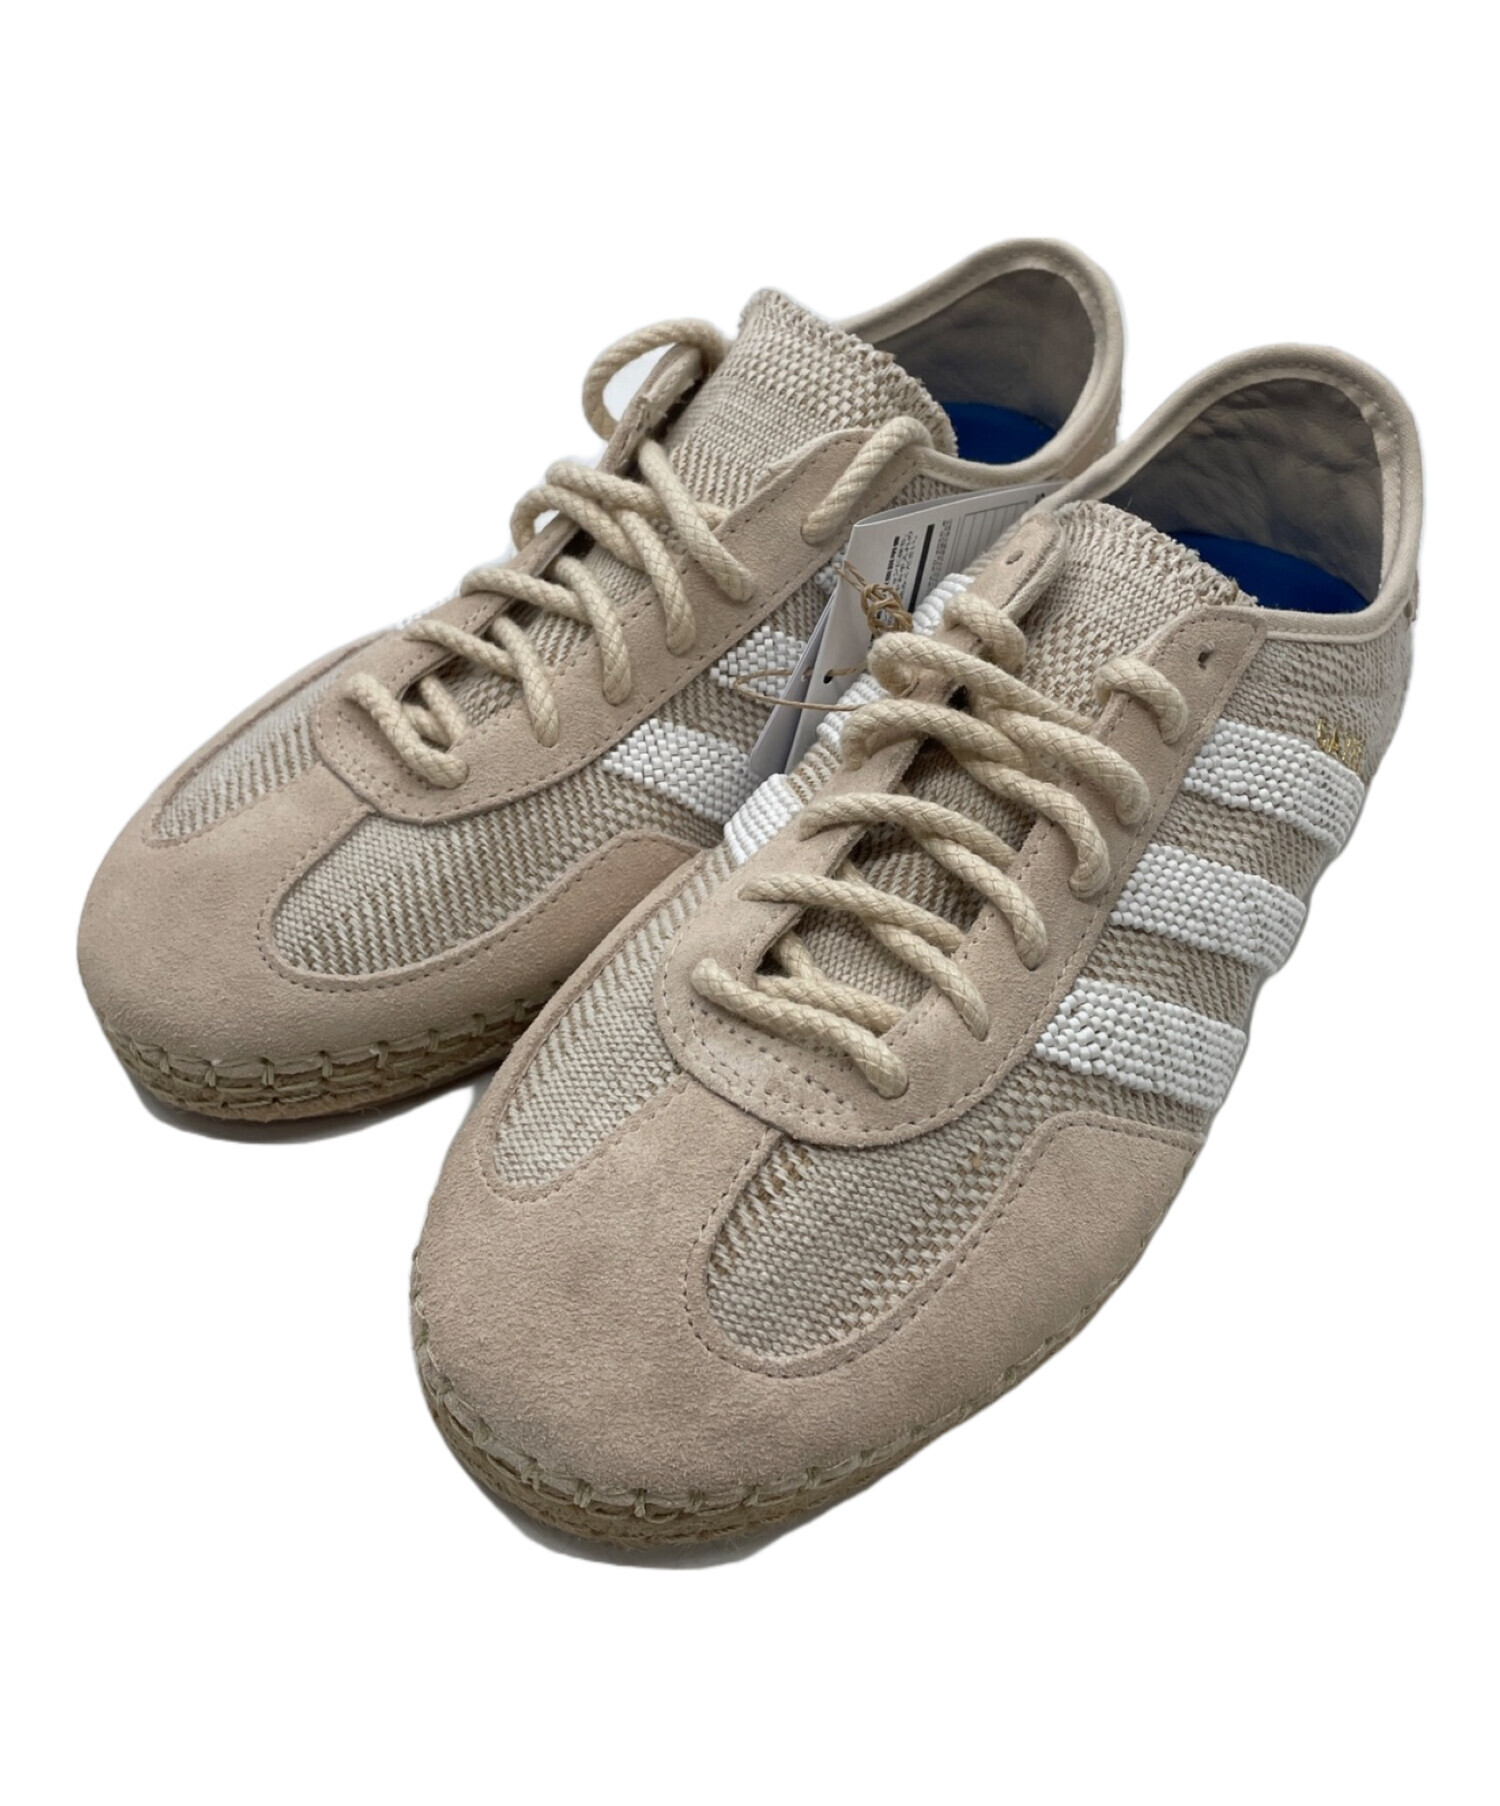 adidas (アディダス) CLOT (クロット) Gazelle Indoor ベージュ サイズ:26.5cm 未使用品